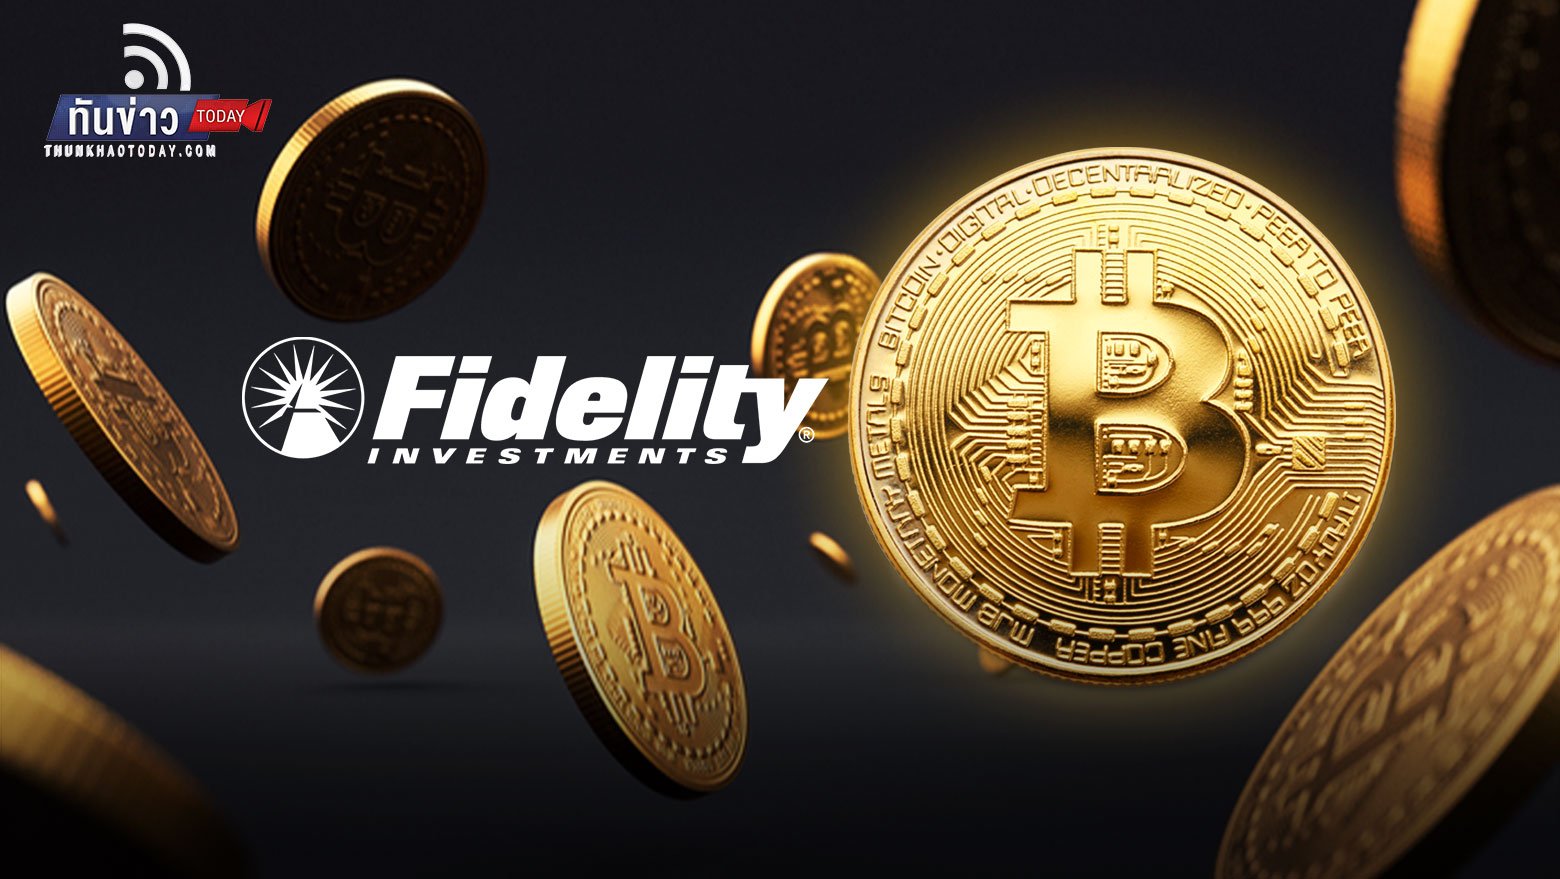 Fidelity Investments เสนอให้บิตคอยน์เข้าไปอยู่ในแผนการออมเพื่อการเกษียณเป็นที่แรก!